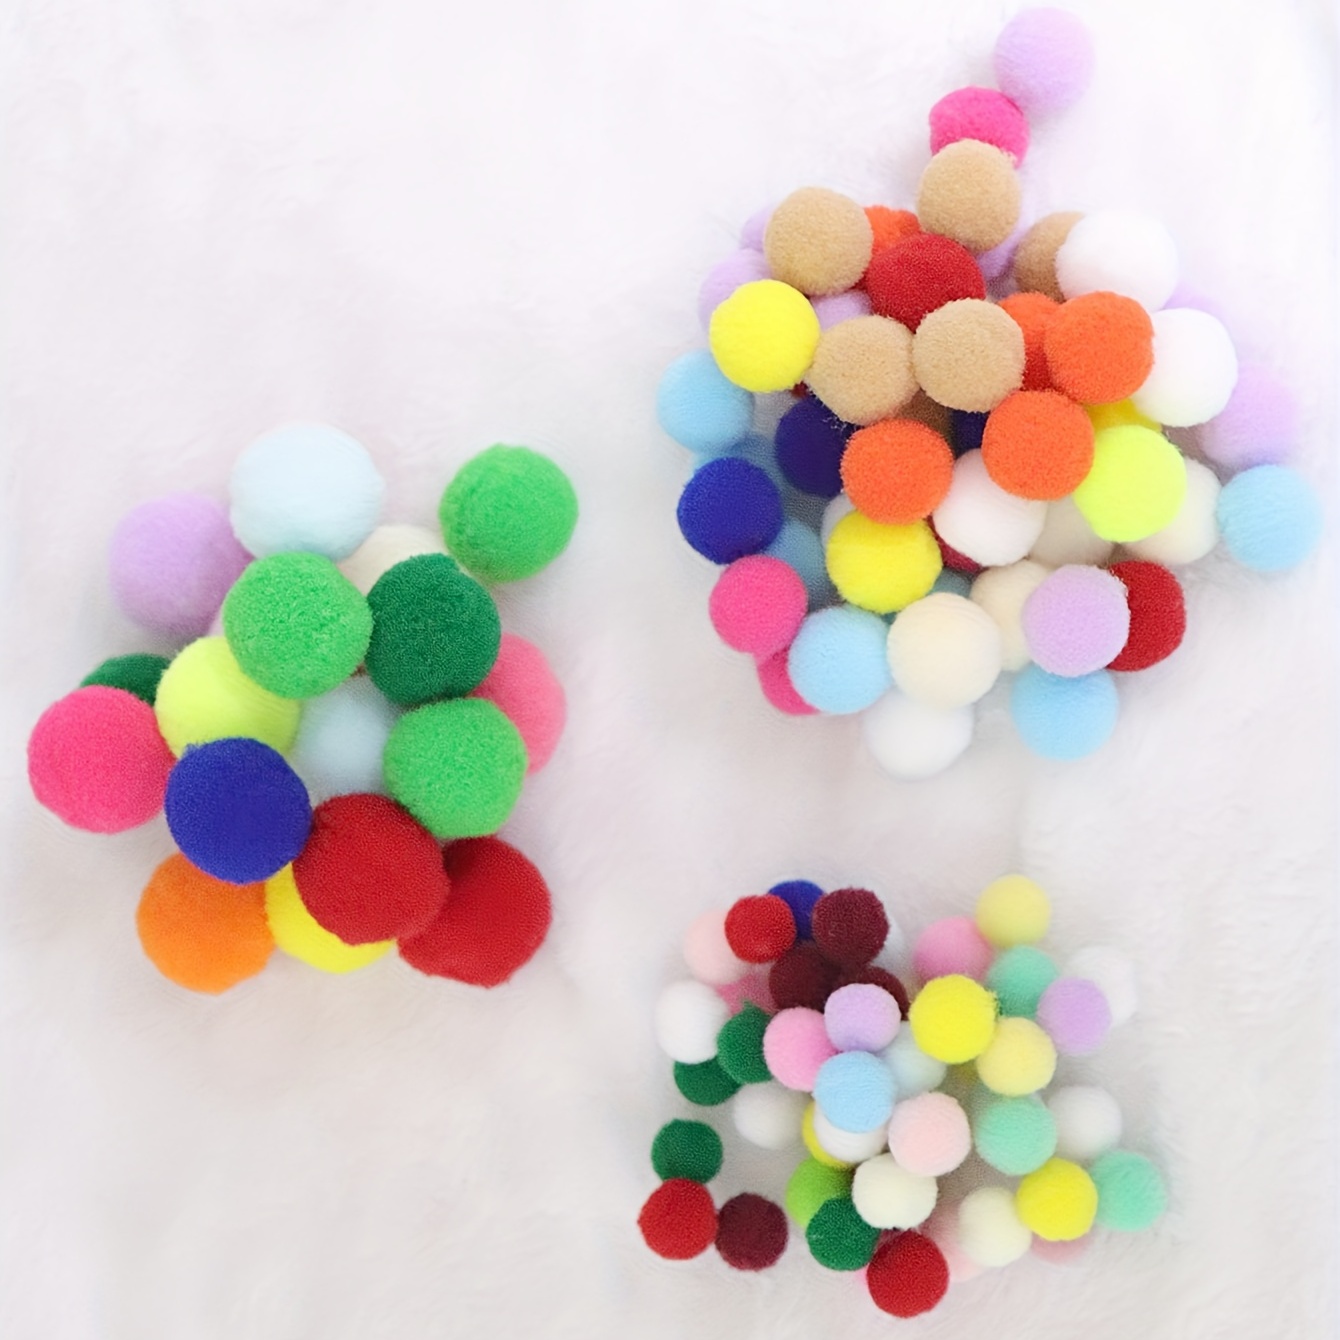  1000Pcs Craft Pom Pom Balls Assorted Size Colored Pom Poms Arts  and Crafts, Soft and Fluffy Craft Pompoms Bulk Small Fuzzy Pompom Balls for  Crafts DIY Creative Crafts Decorations : Arts